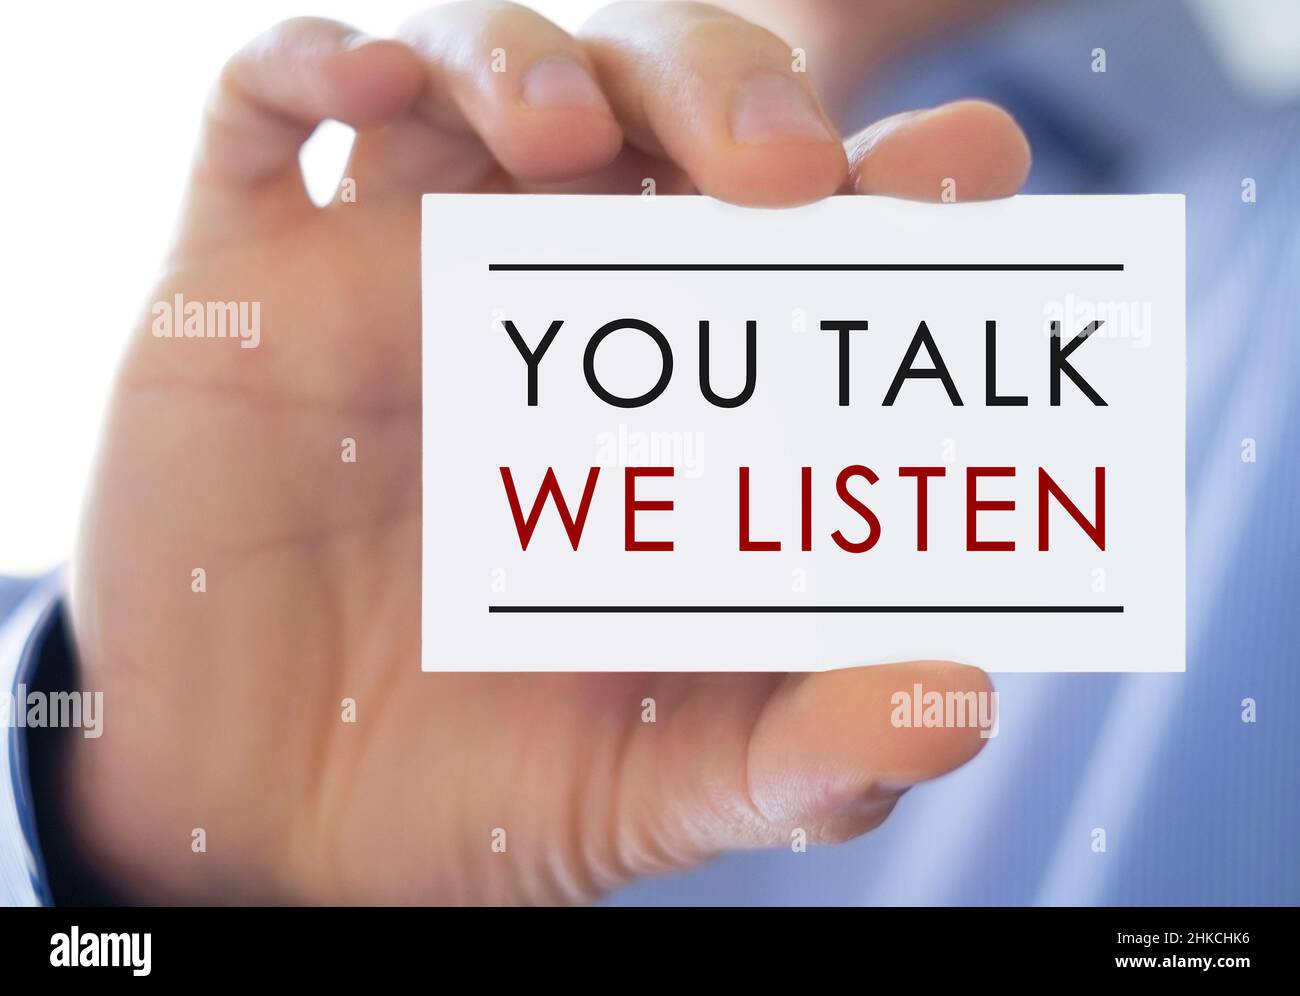 You talk - We listen Stock Photo